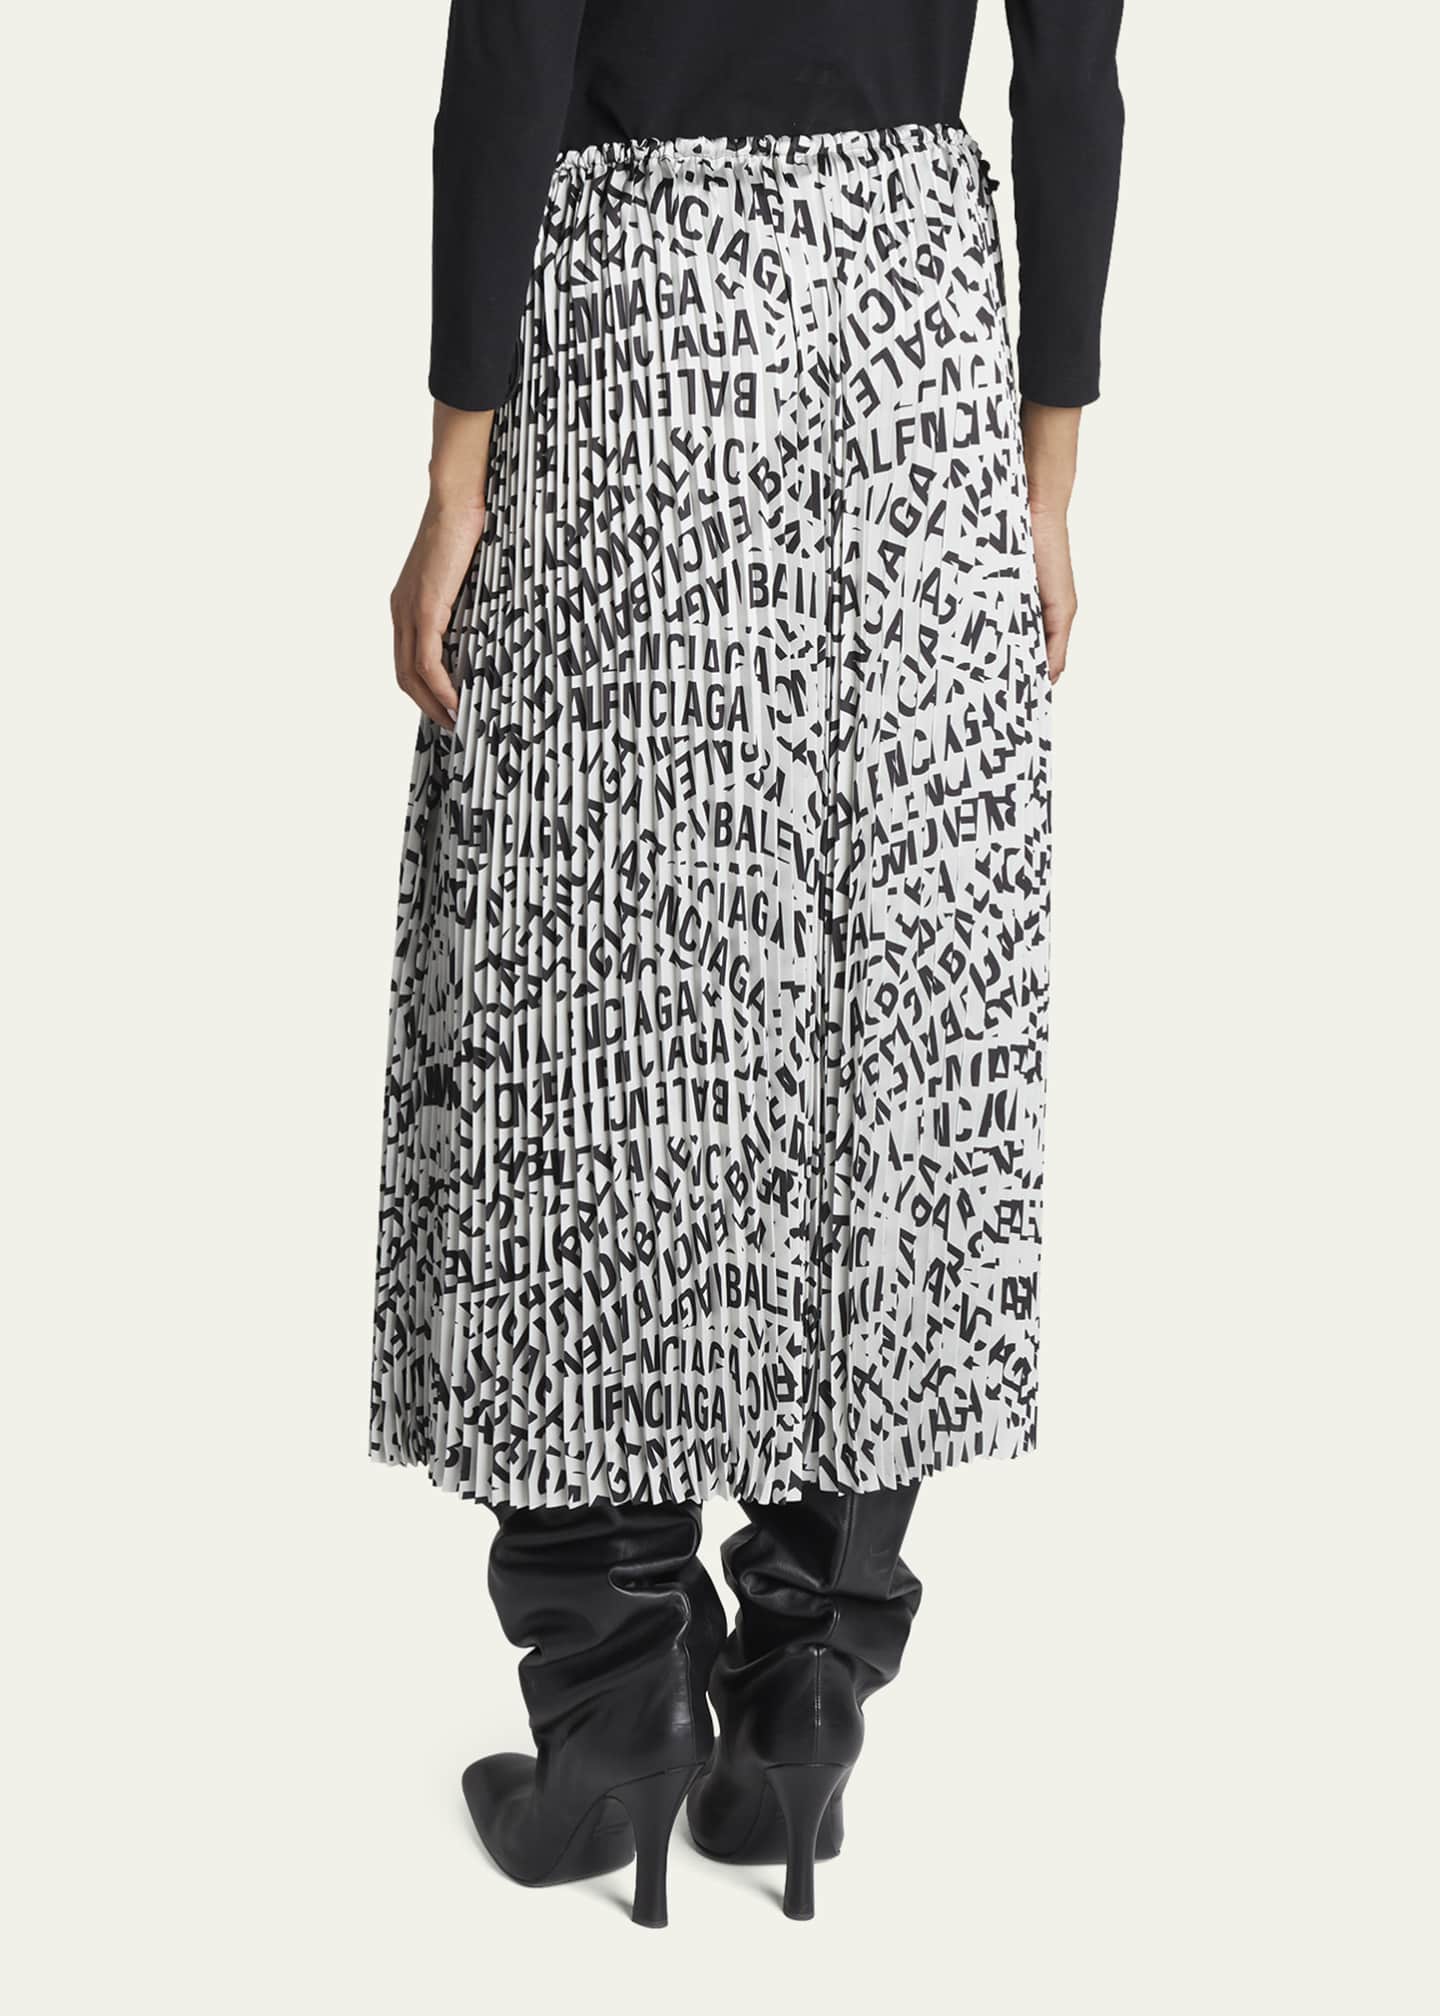 Balenciaga Strips Print Pleated Skirt - Bergdorf